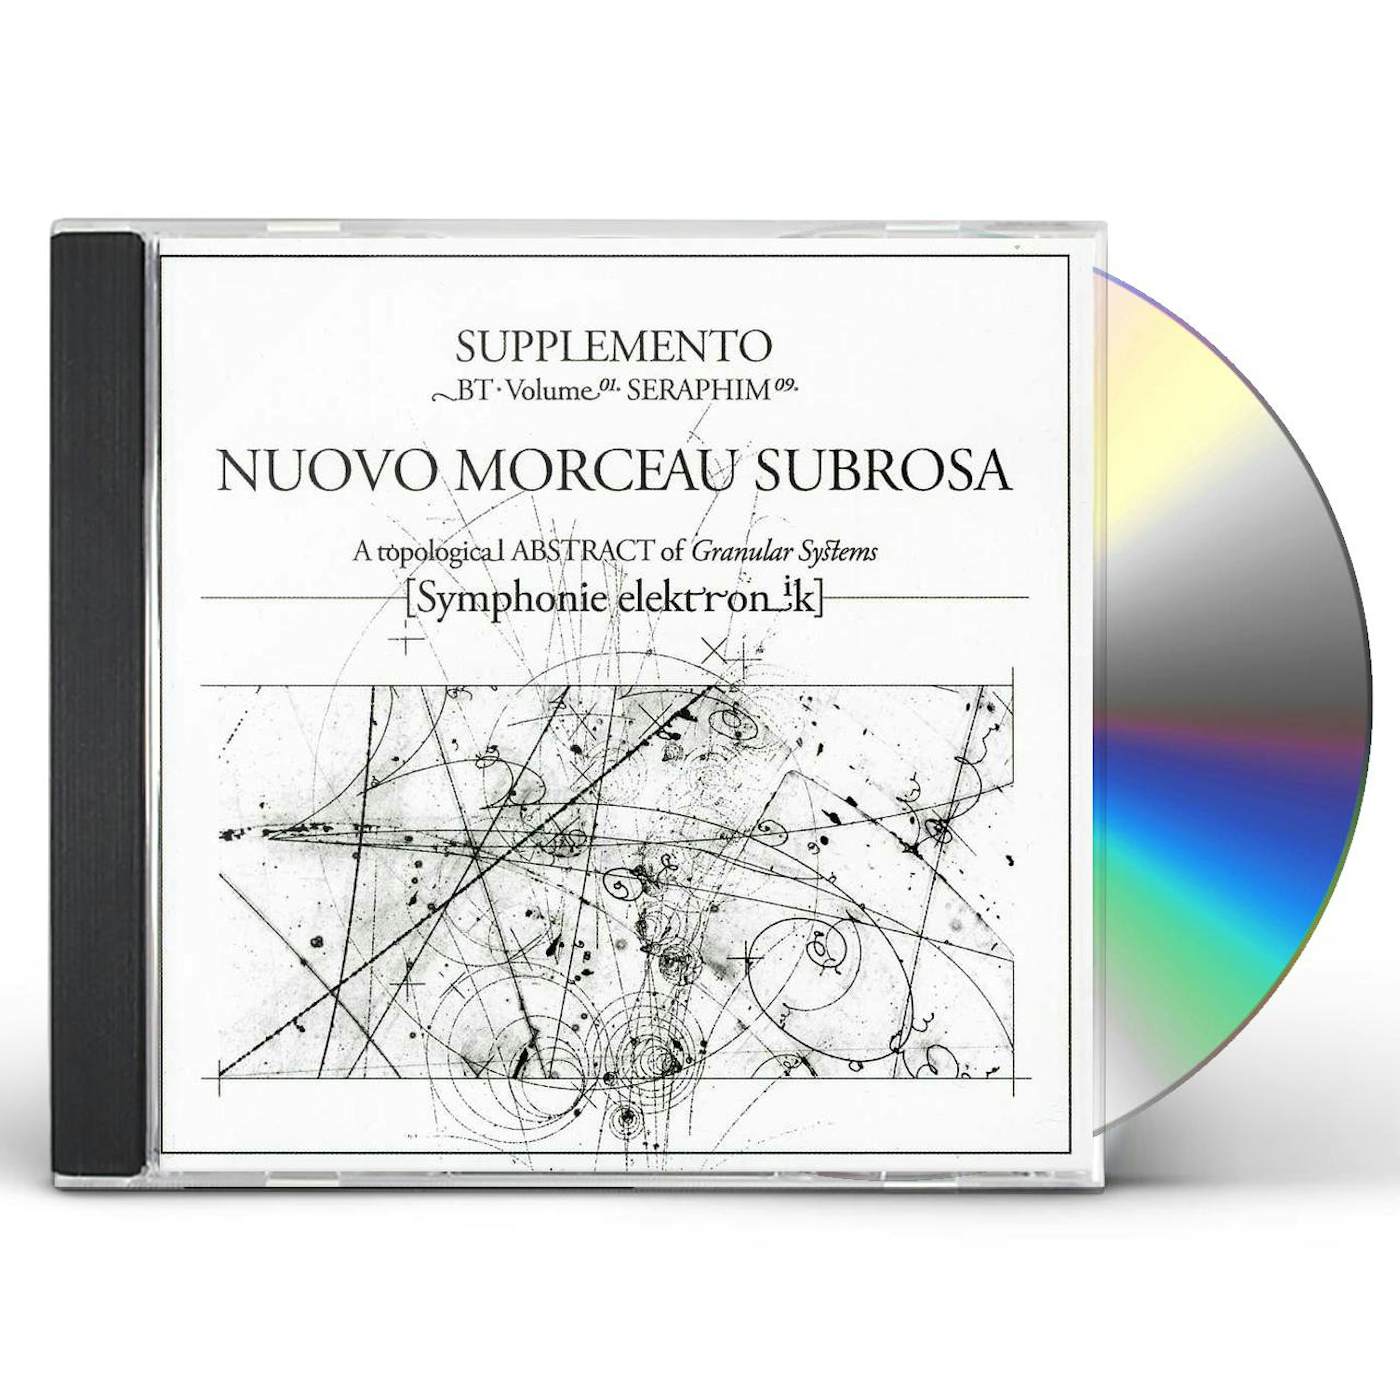 BT NUOVO MORCEAU SUBROSA CD